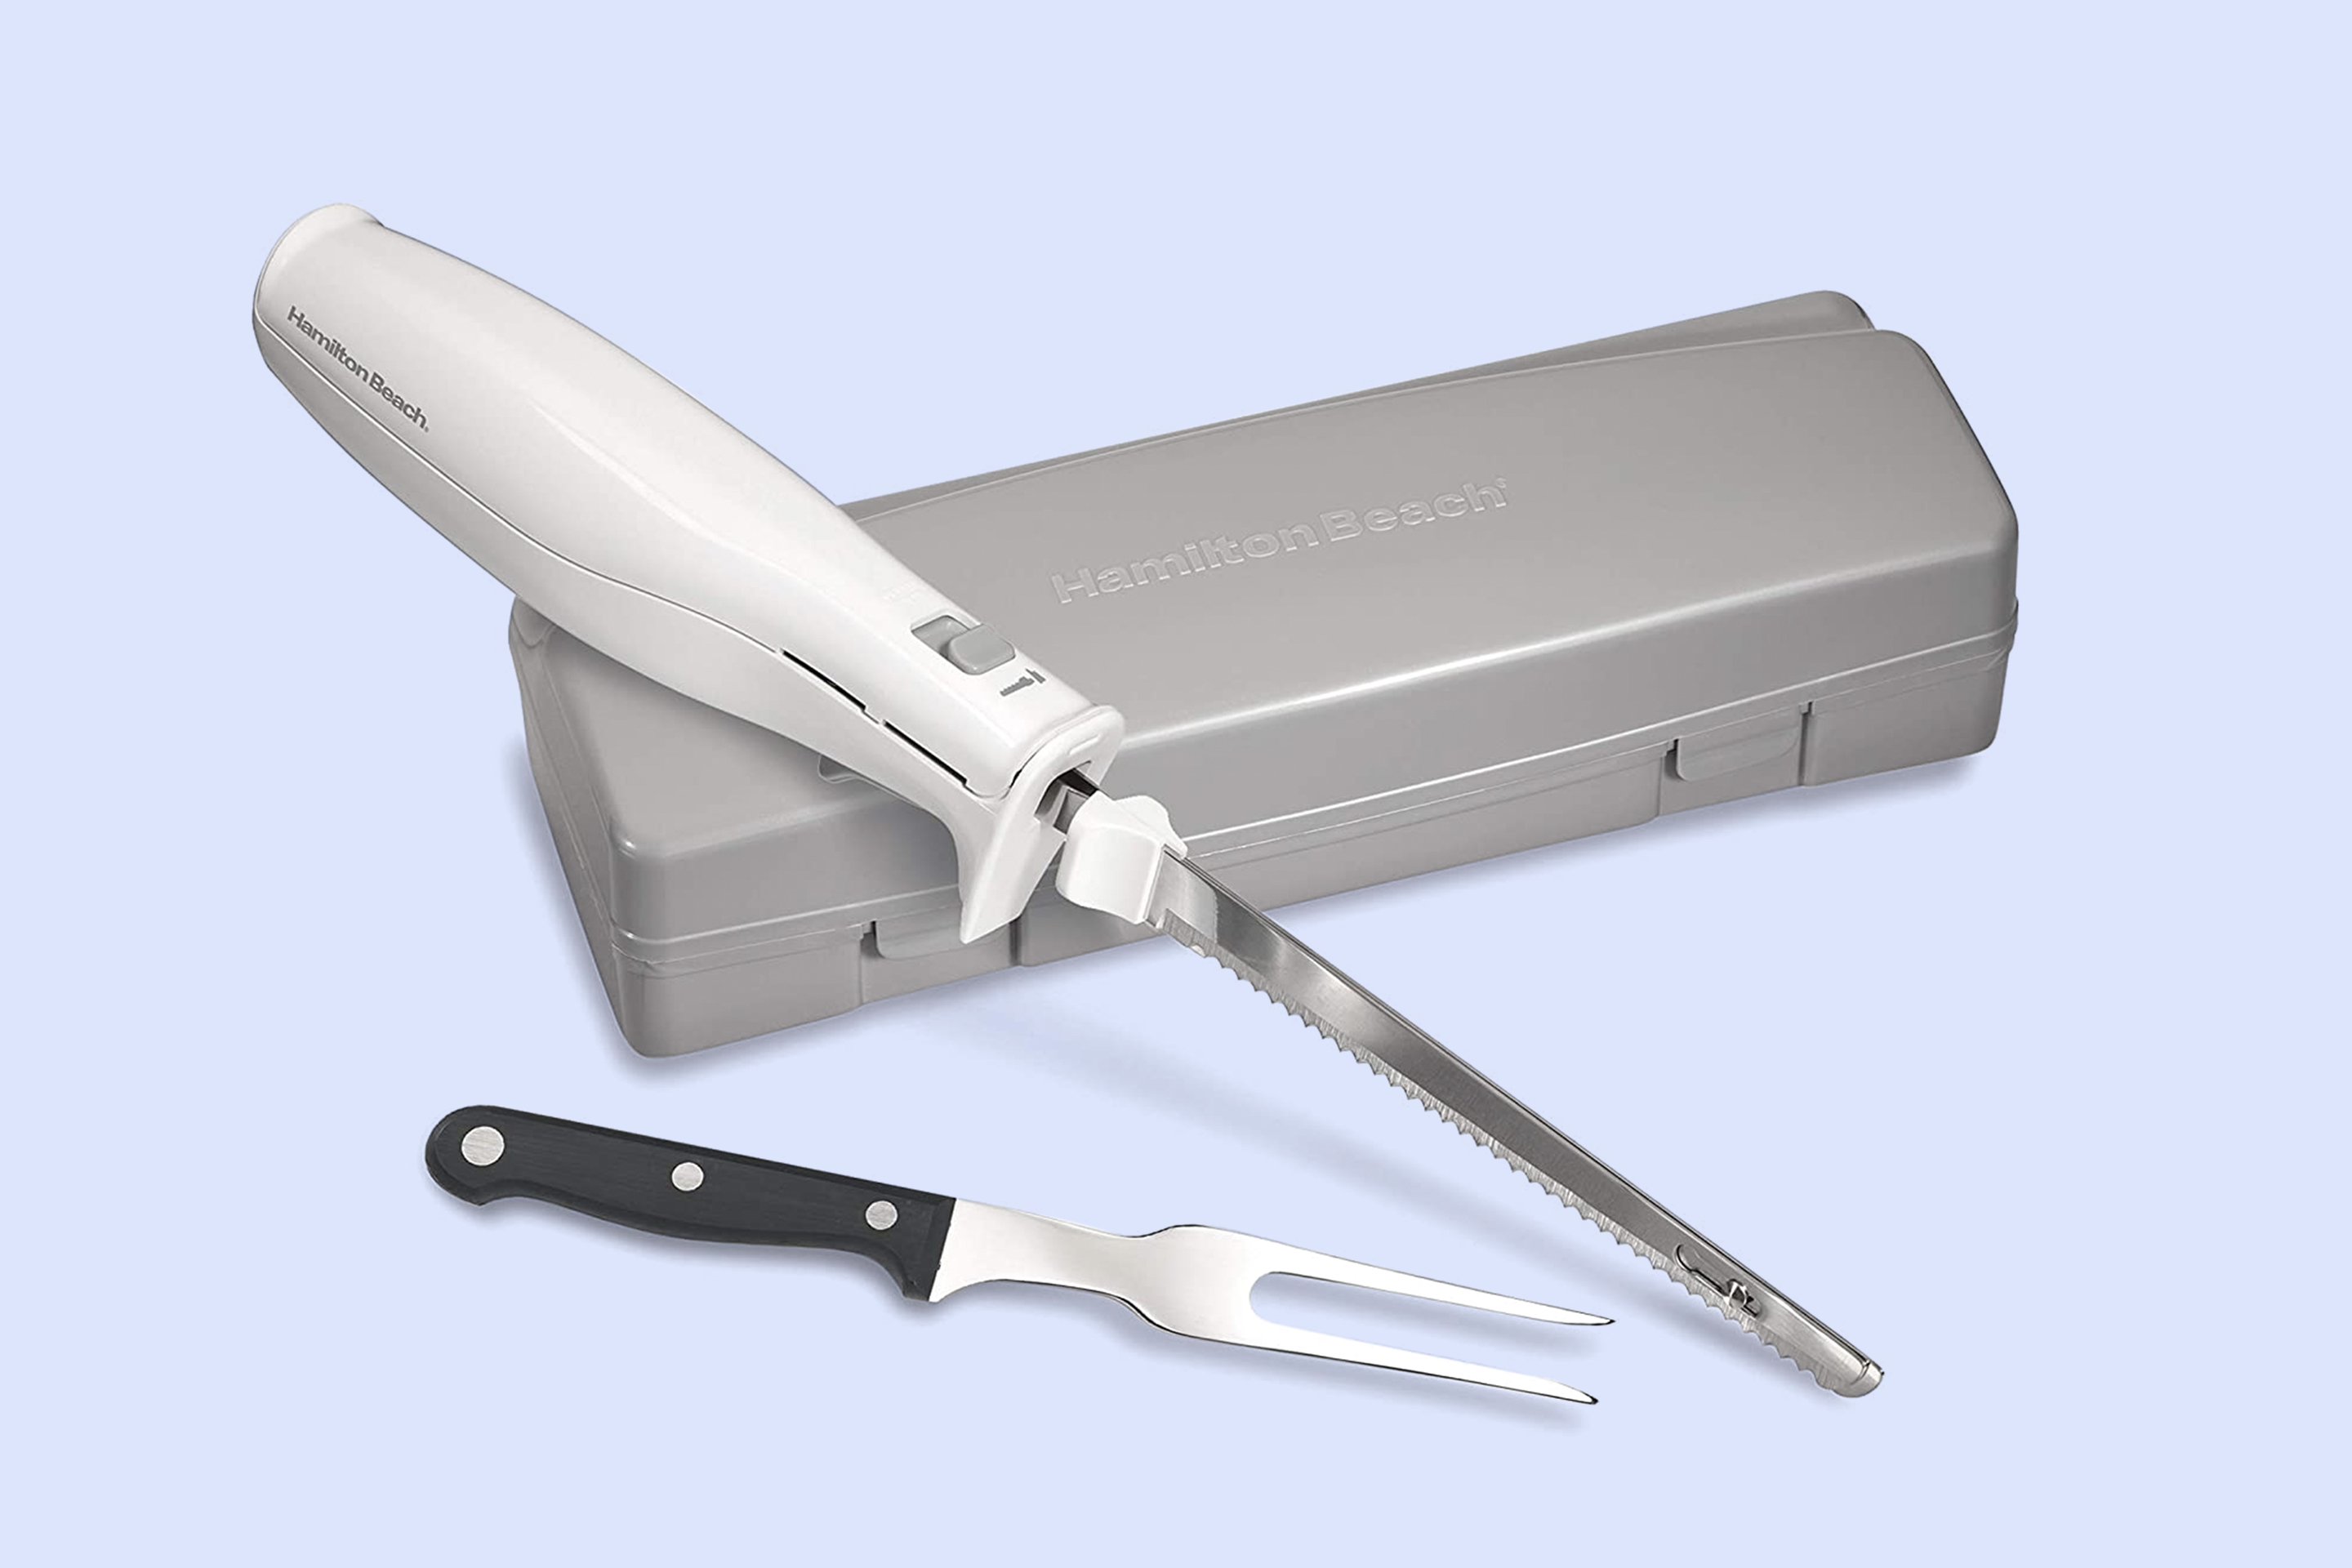 Knives, Small domestic appliances